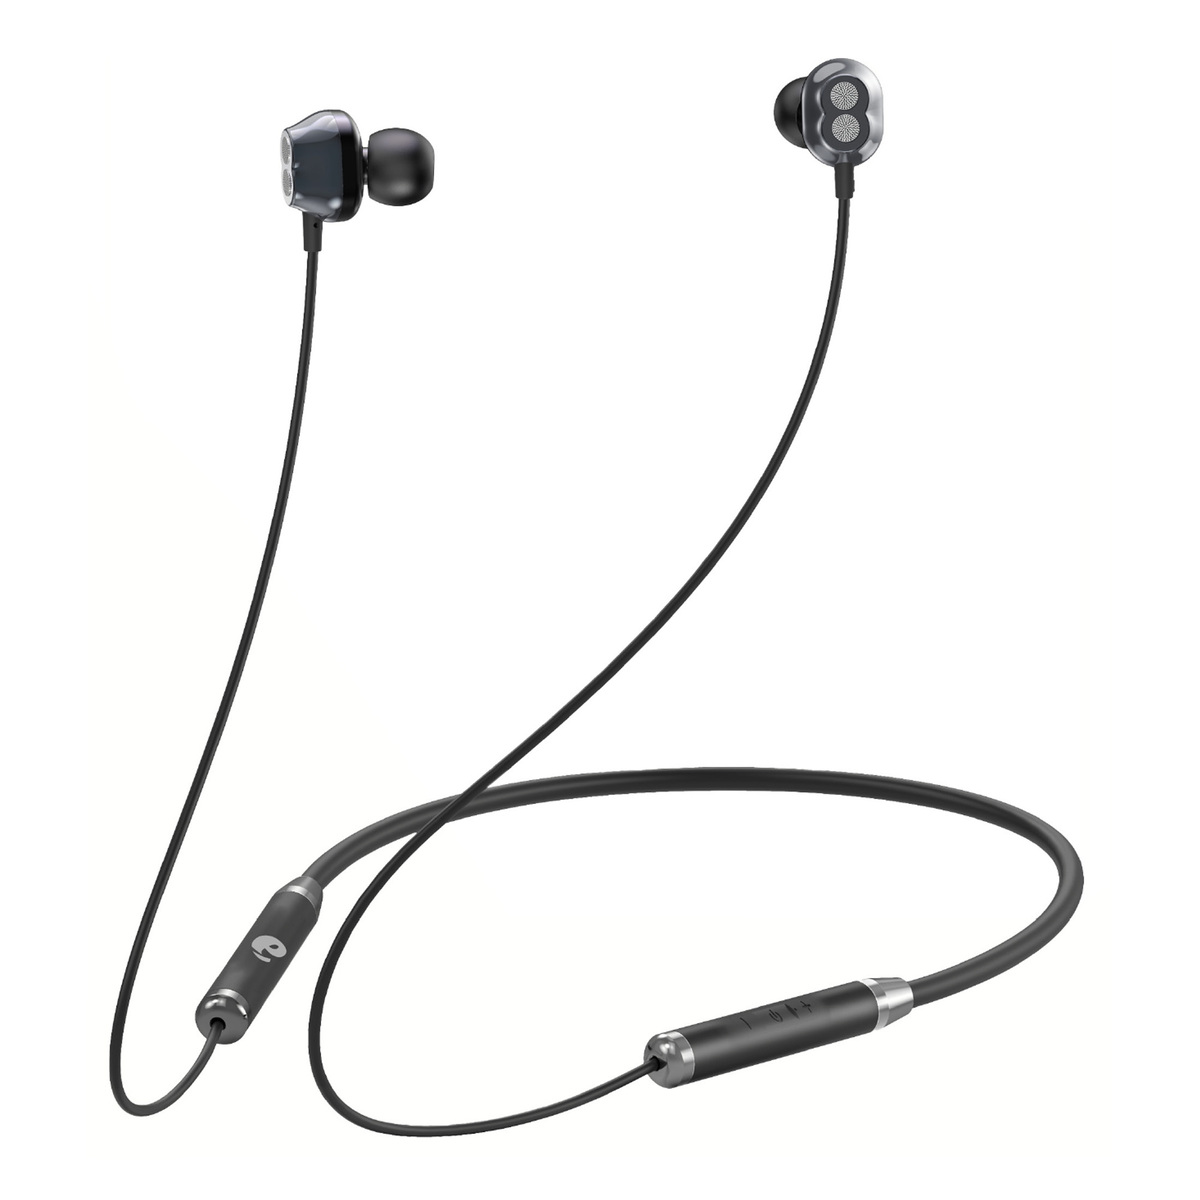 Acer ENC Neckband Headphone, Black, AL ONE